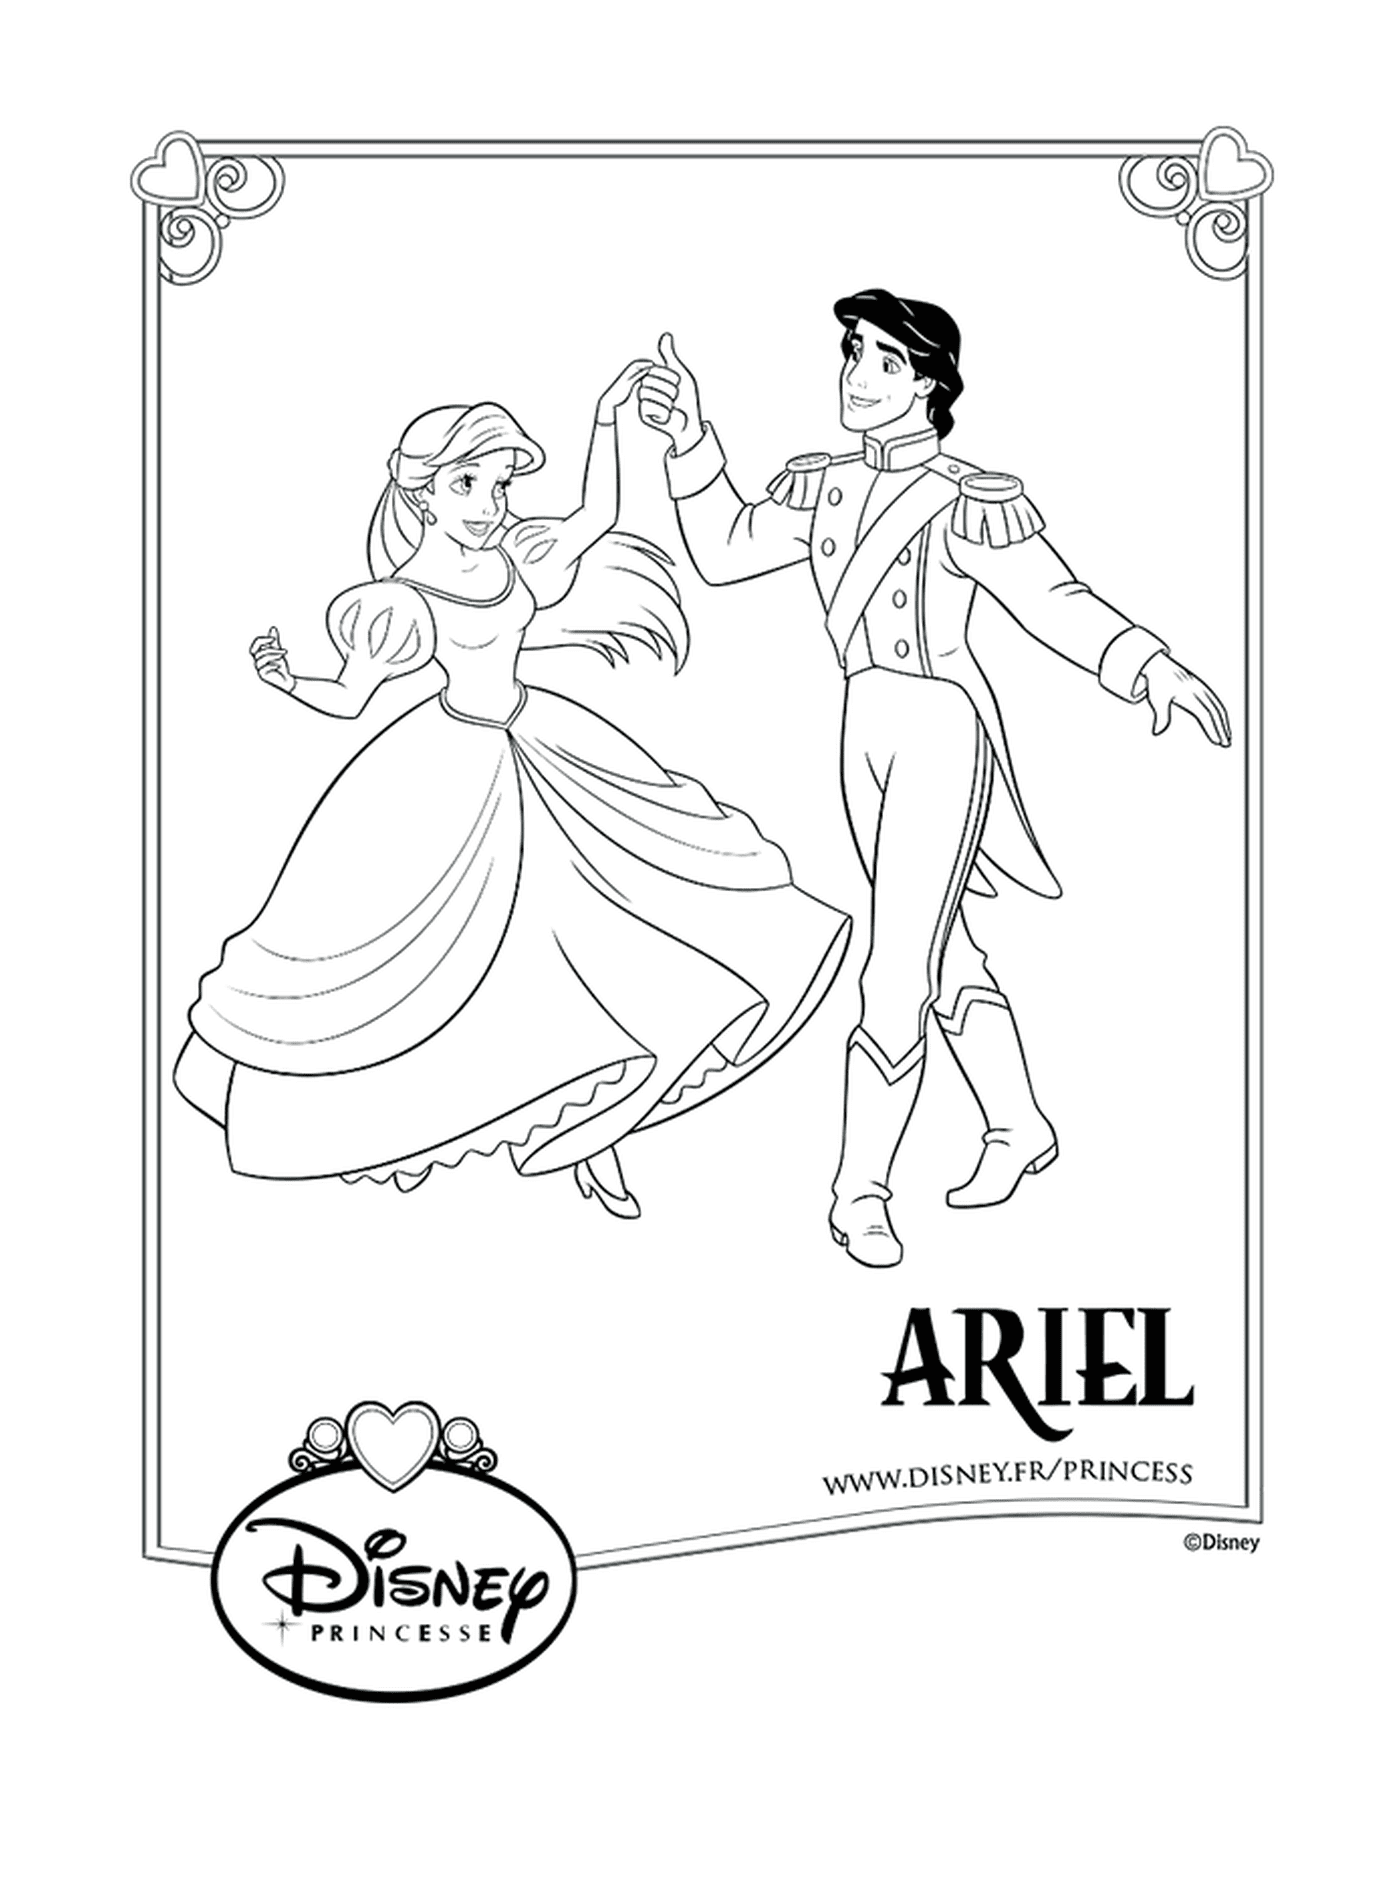   Ariel, une princesse qui danse 